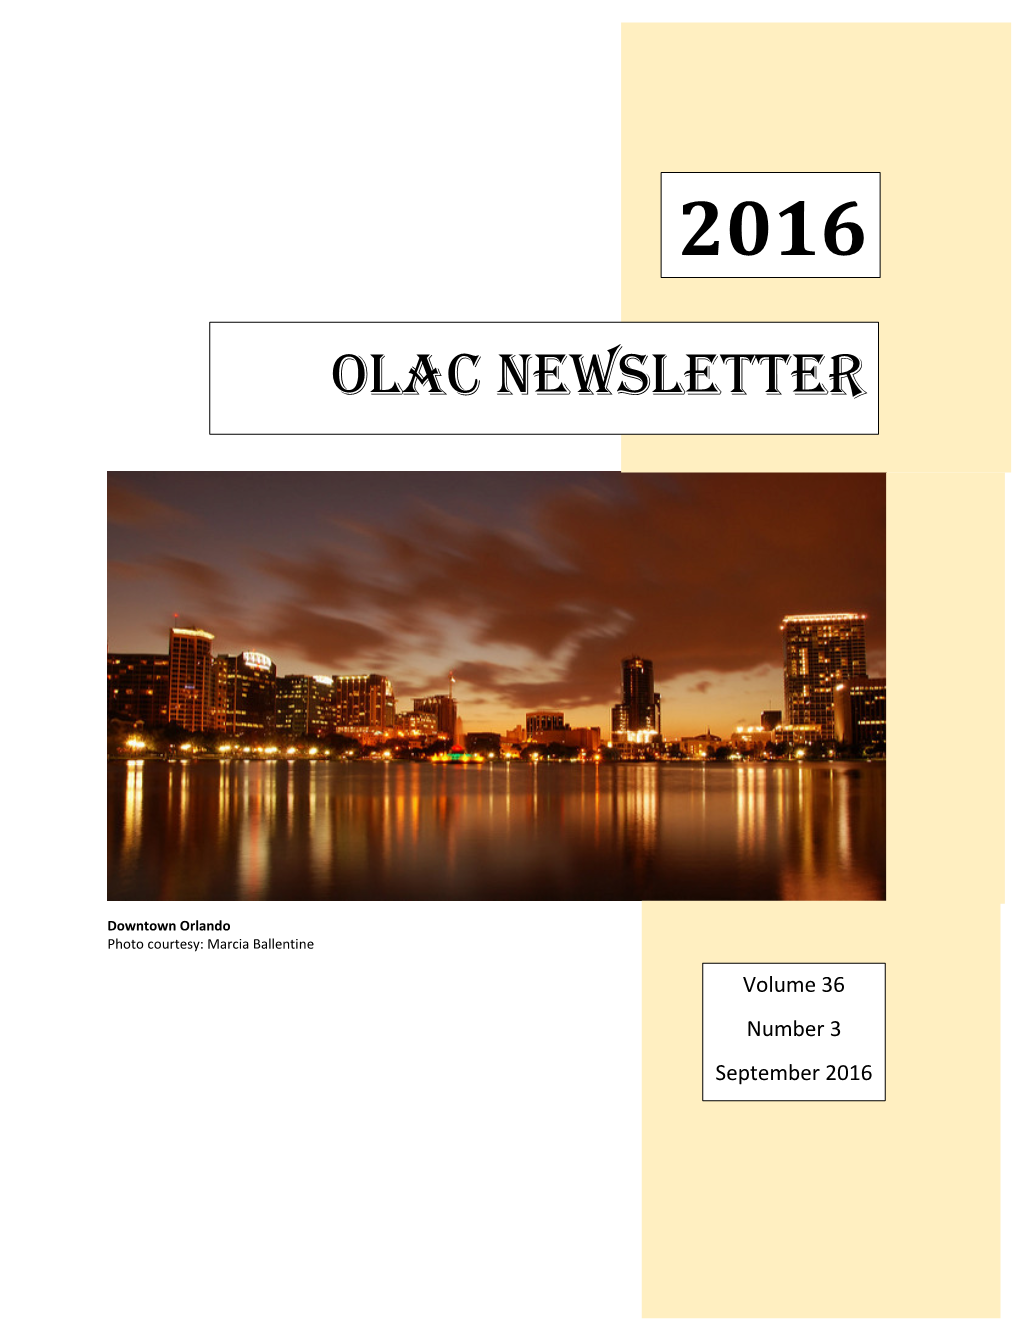 Olac Newsletter